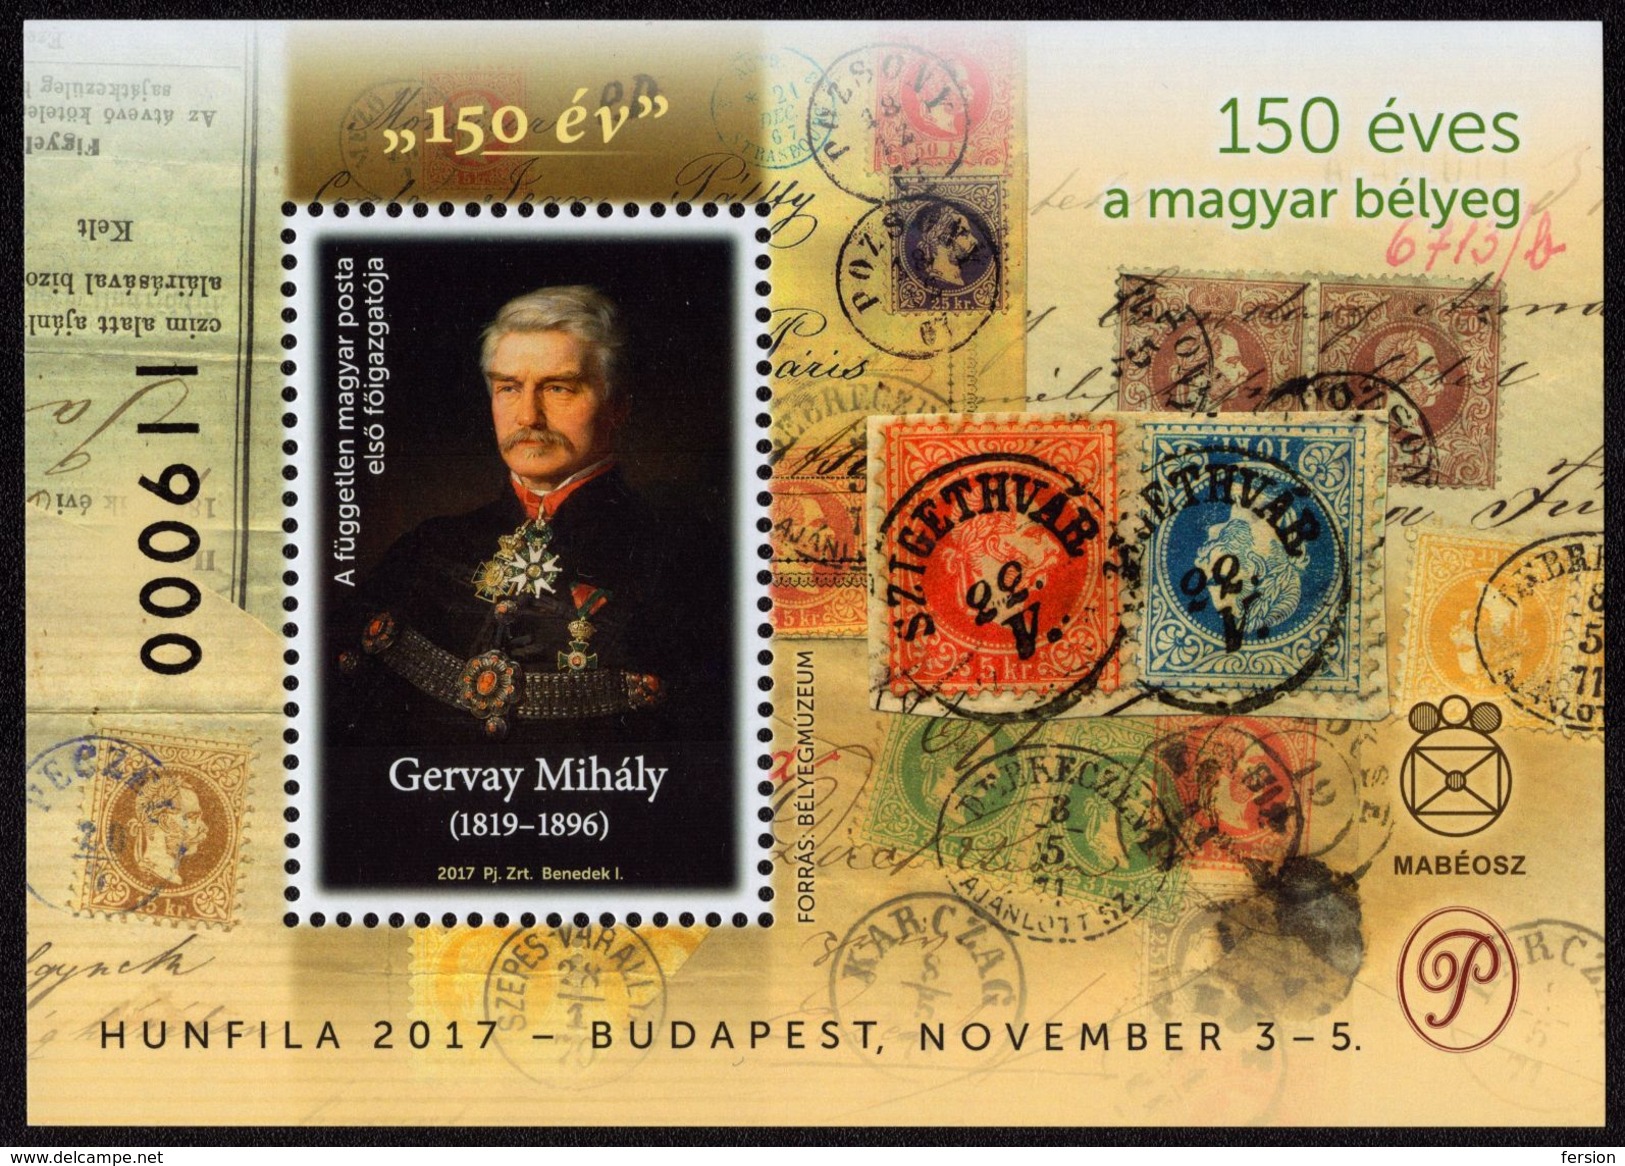 Hunfila 2017 Stamp Exhibition MABÉOSZ Federation Of Hungarian Philatelists / Commemorative Sheet Gervay Stamp On Stamp - Feuillets Souvenir